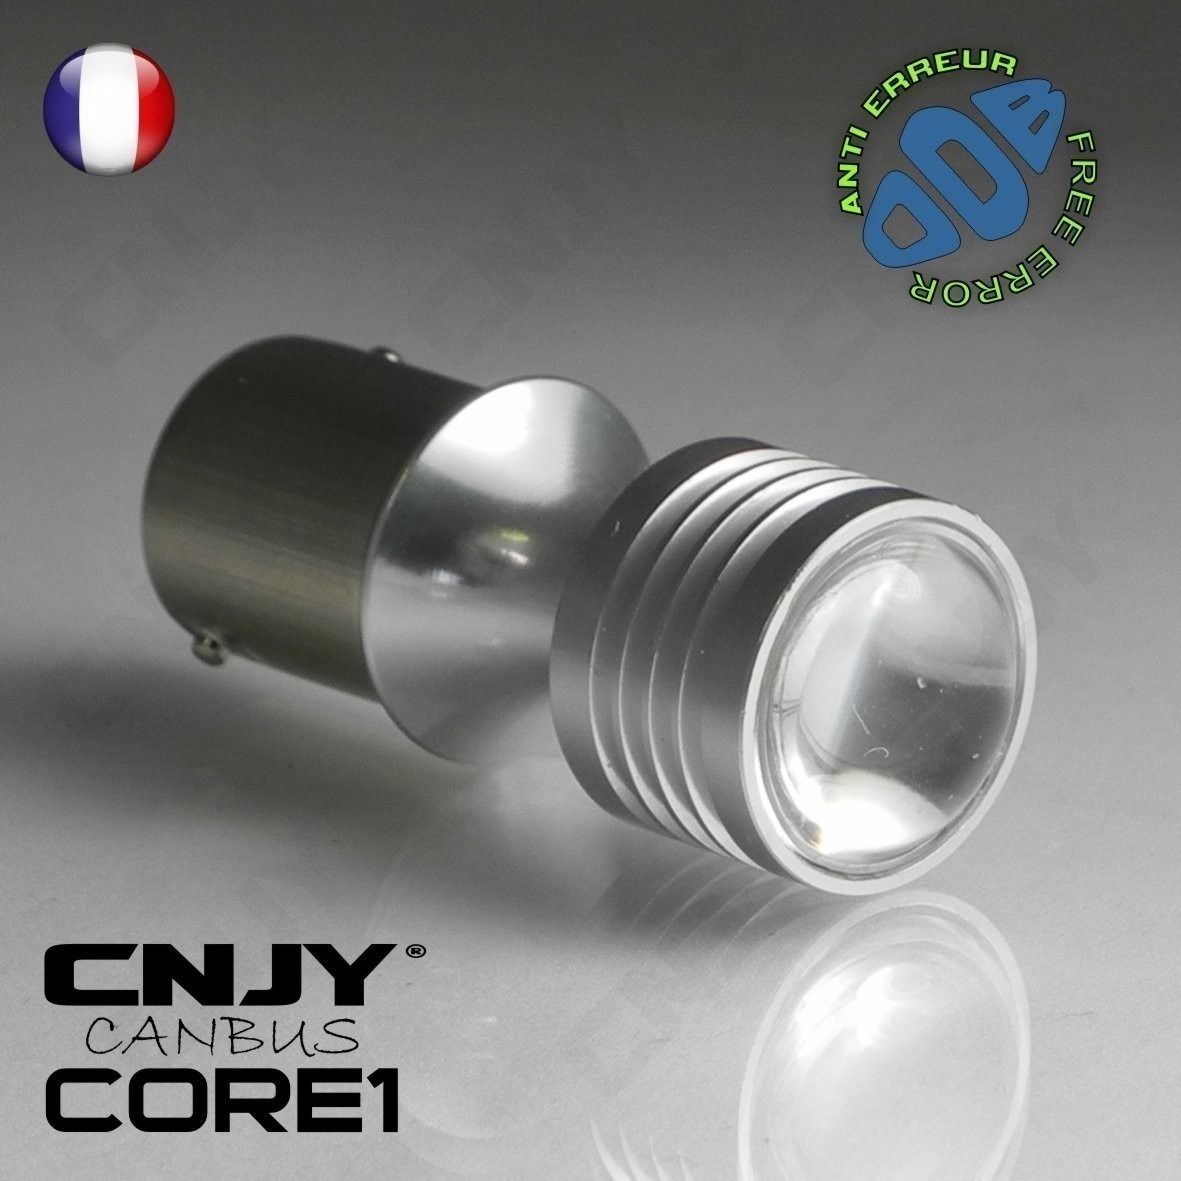 https://www.cnjy-led.fr/595/1-ampoule-led-blanc-cnjy-core1-ba15s-s25-p21w-canbus-anti-erreur-odb-feux-jour-diurne.jpg